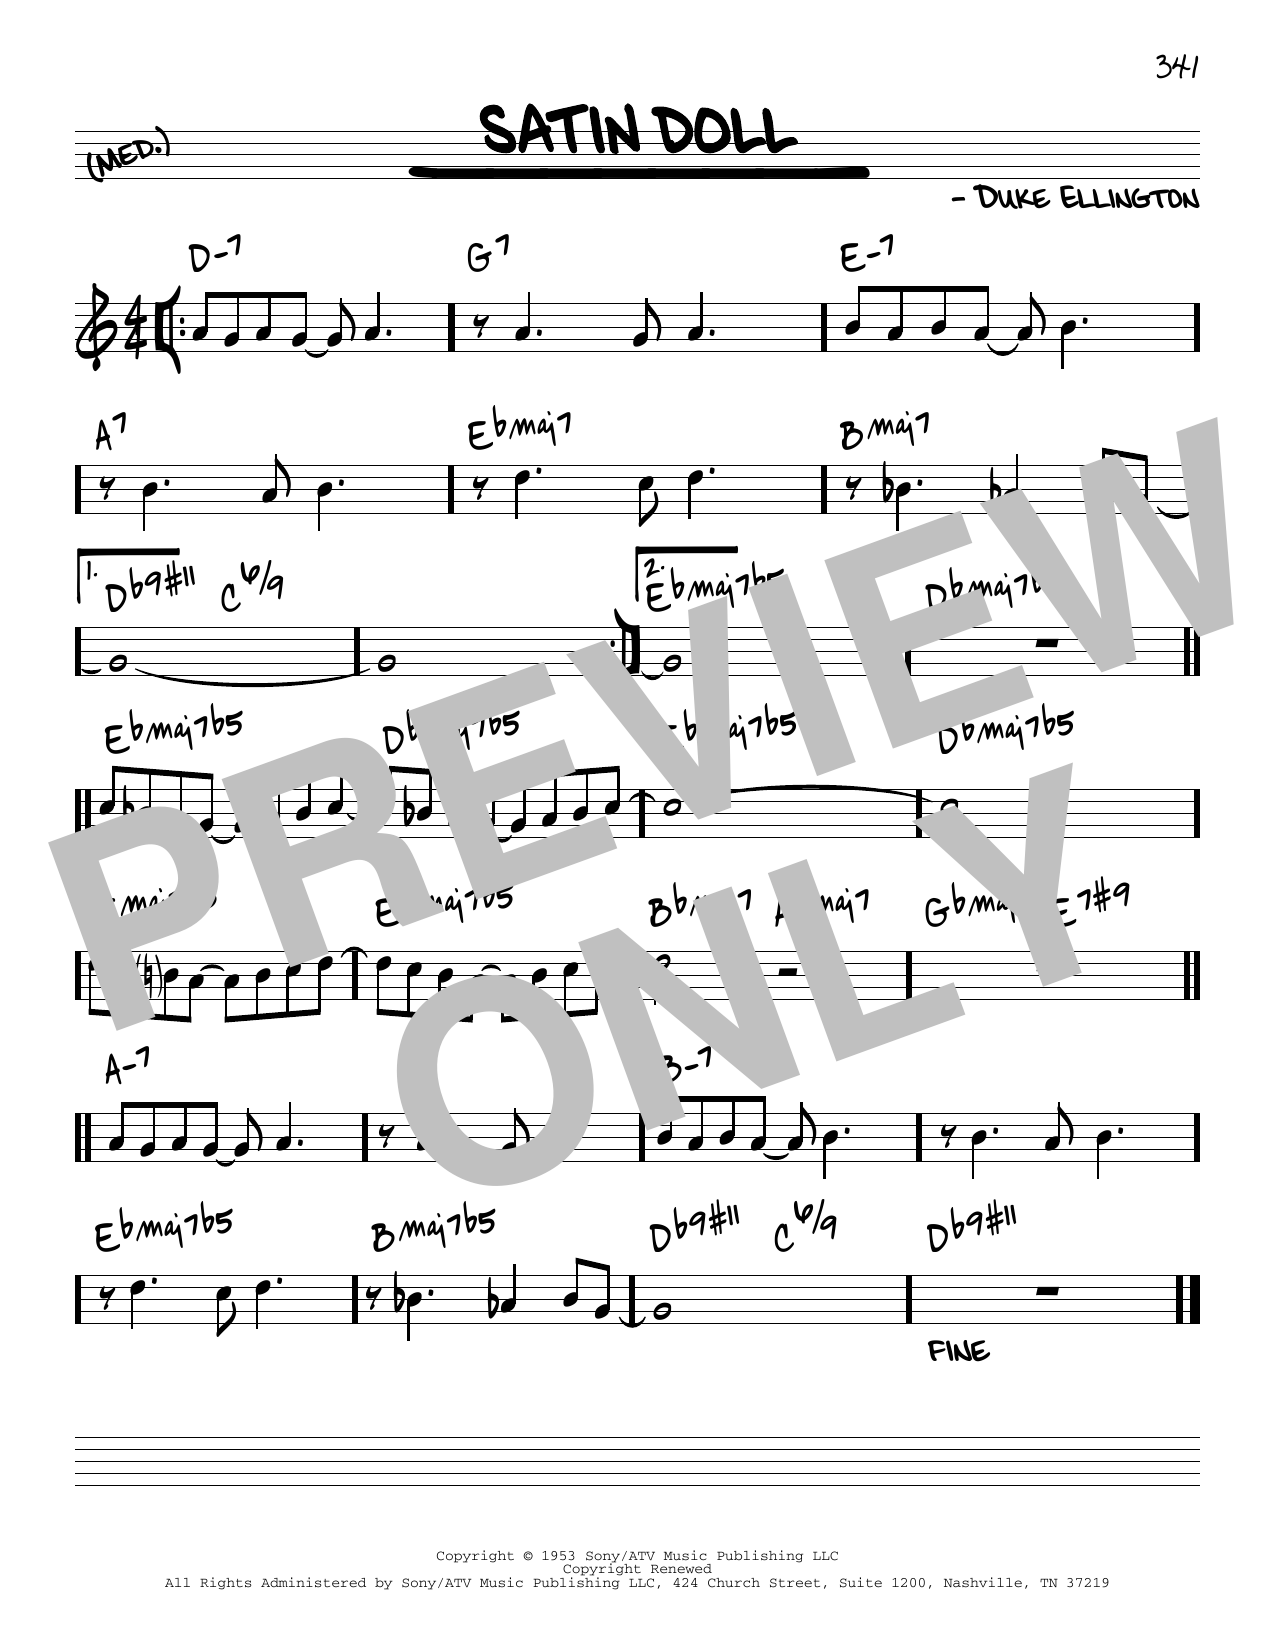 Duke Ellington Satin Doll [Reharmonized version] (arr. Jack Grassel) Sheet Music Notes & Chords for Real Book – Melody & Chords - Download or Print PDF